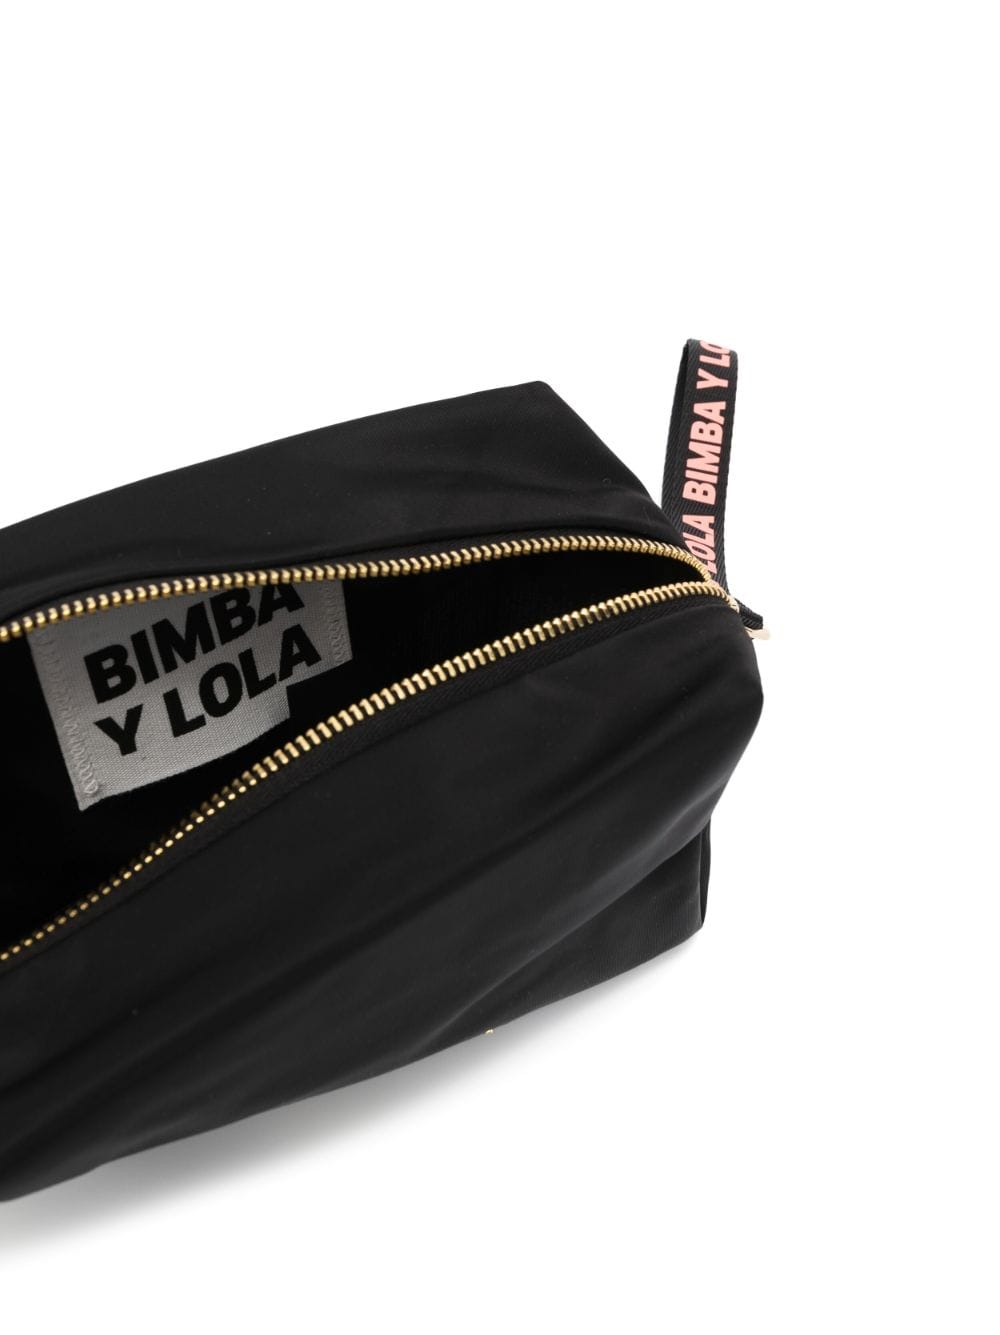 Bimba y Lola logo-print leather coin purse, Black